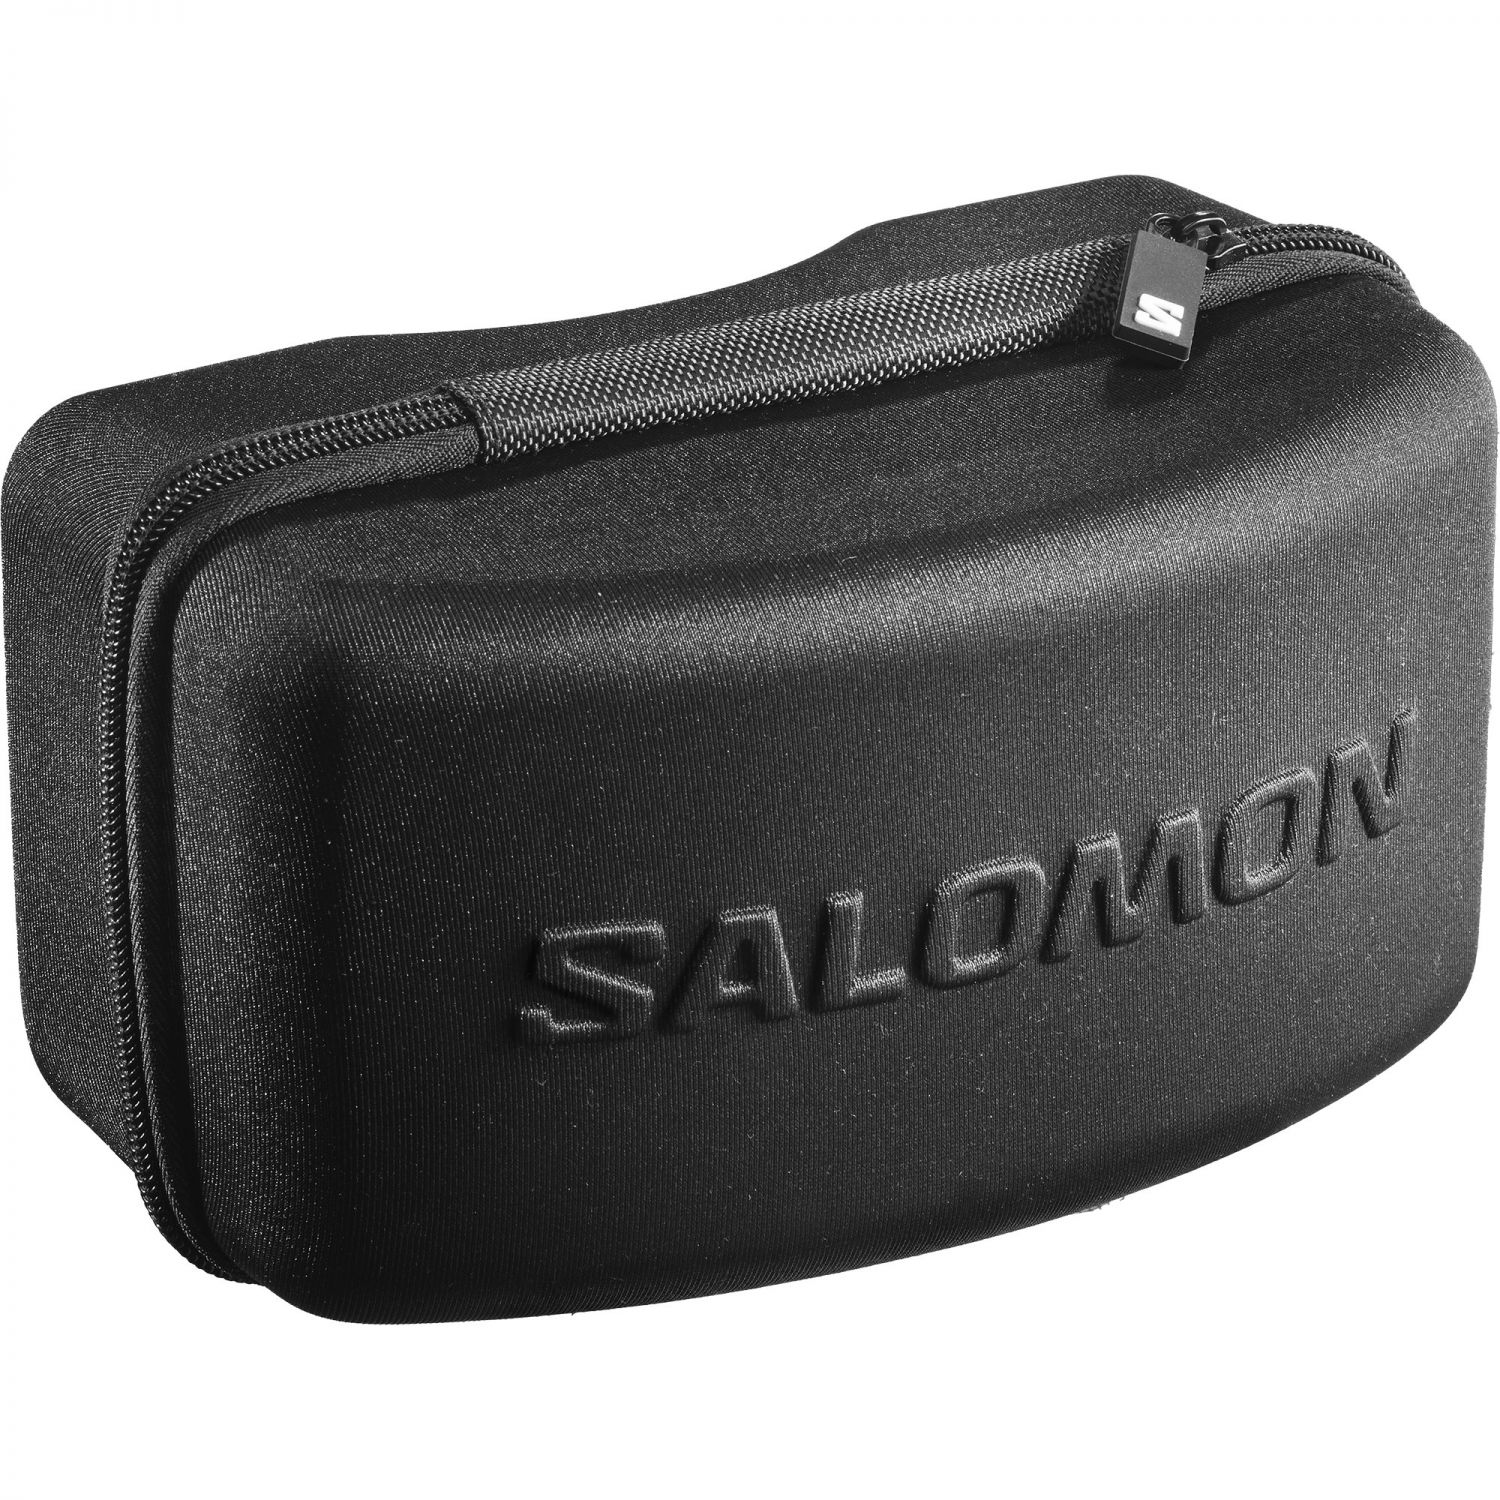 Salomon Sentry Pro Sigma, ski bril, turkoois